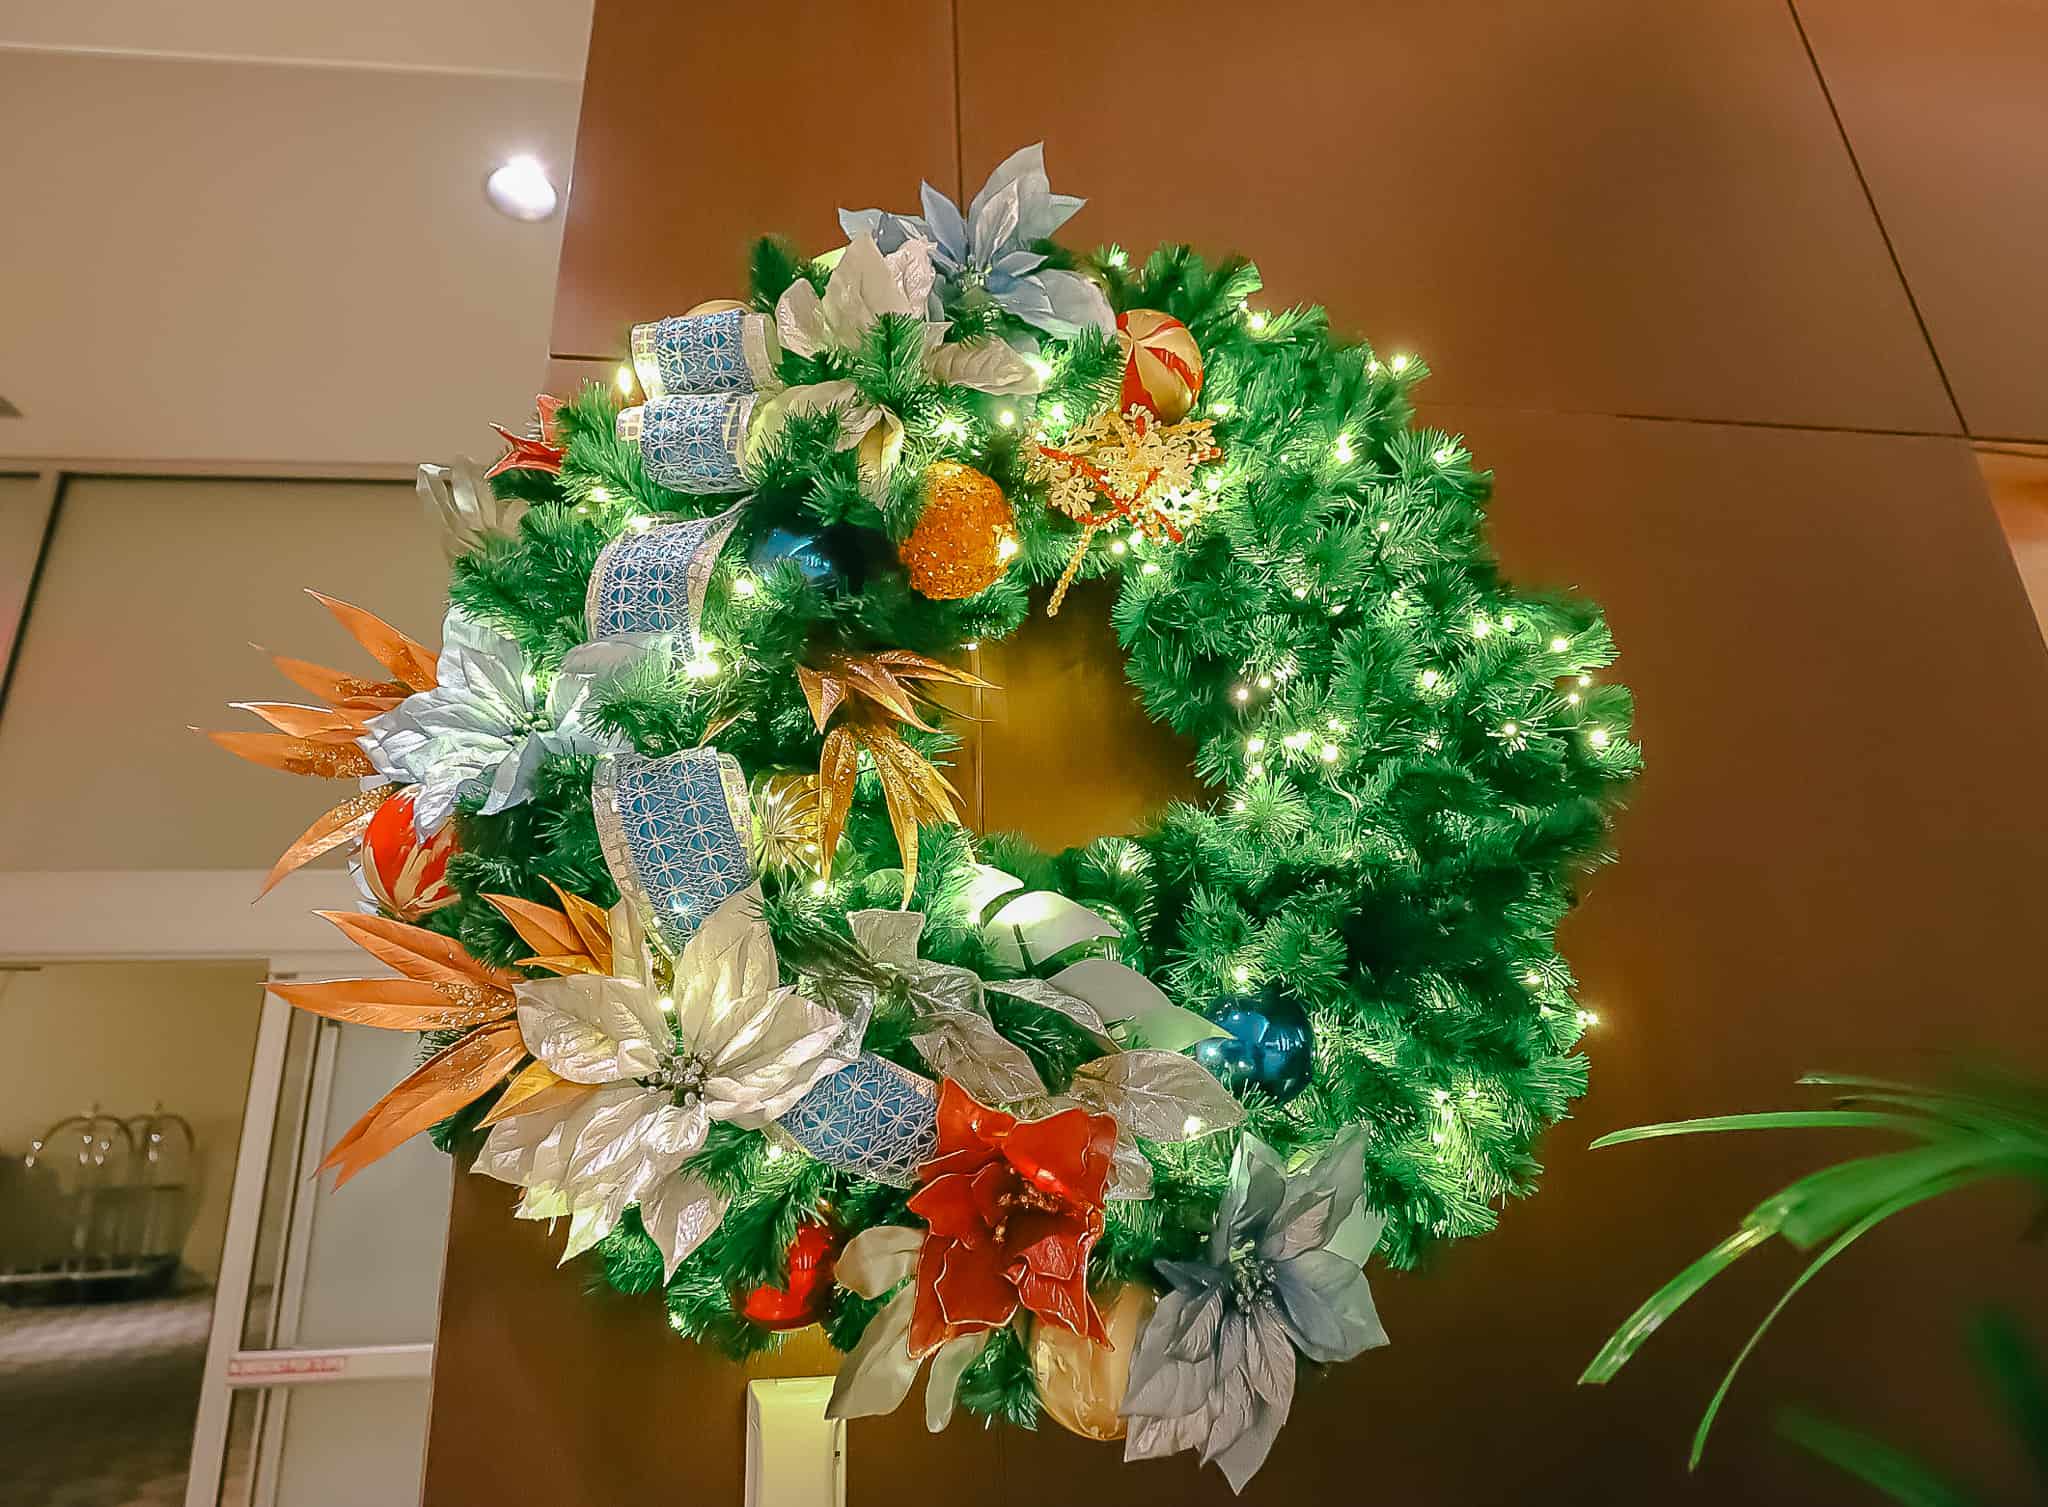 A Christmas wreath at Disney's Contemporary